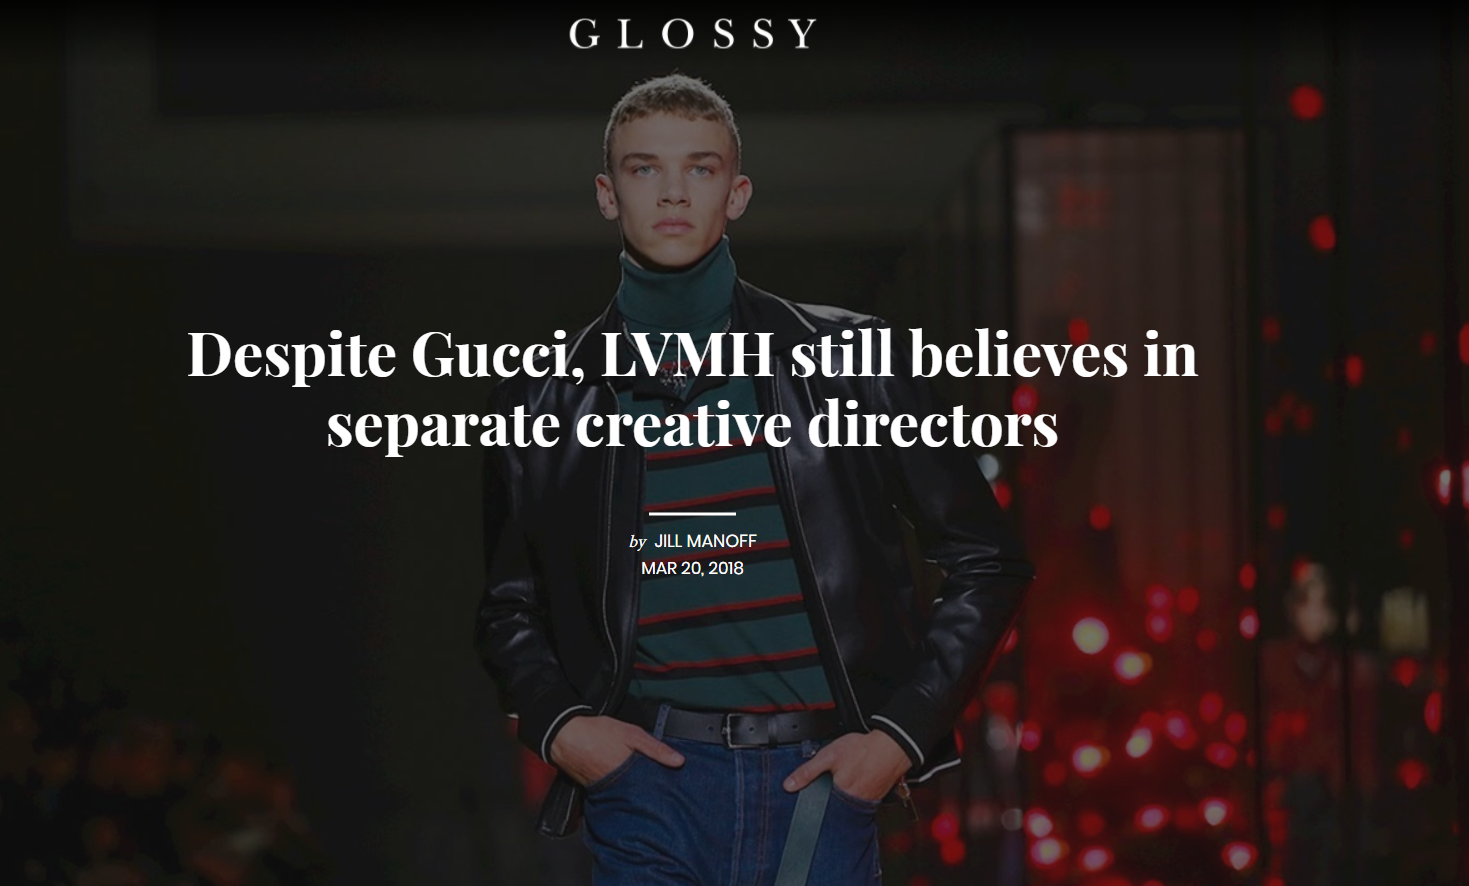 Despite Gucci, LVMH still believes in separate creative directors - Traub